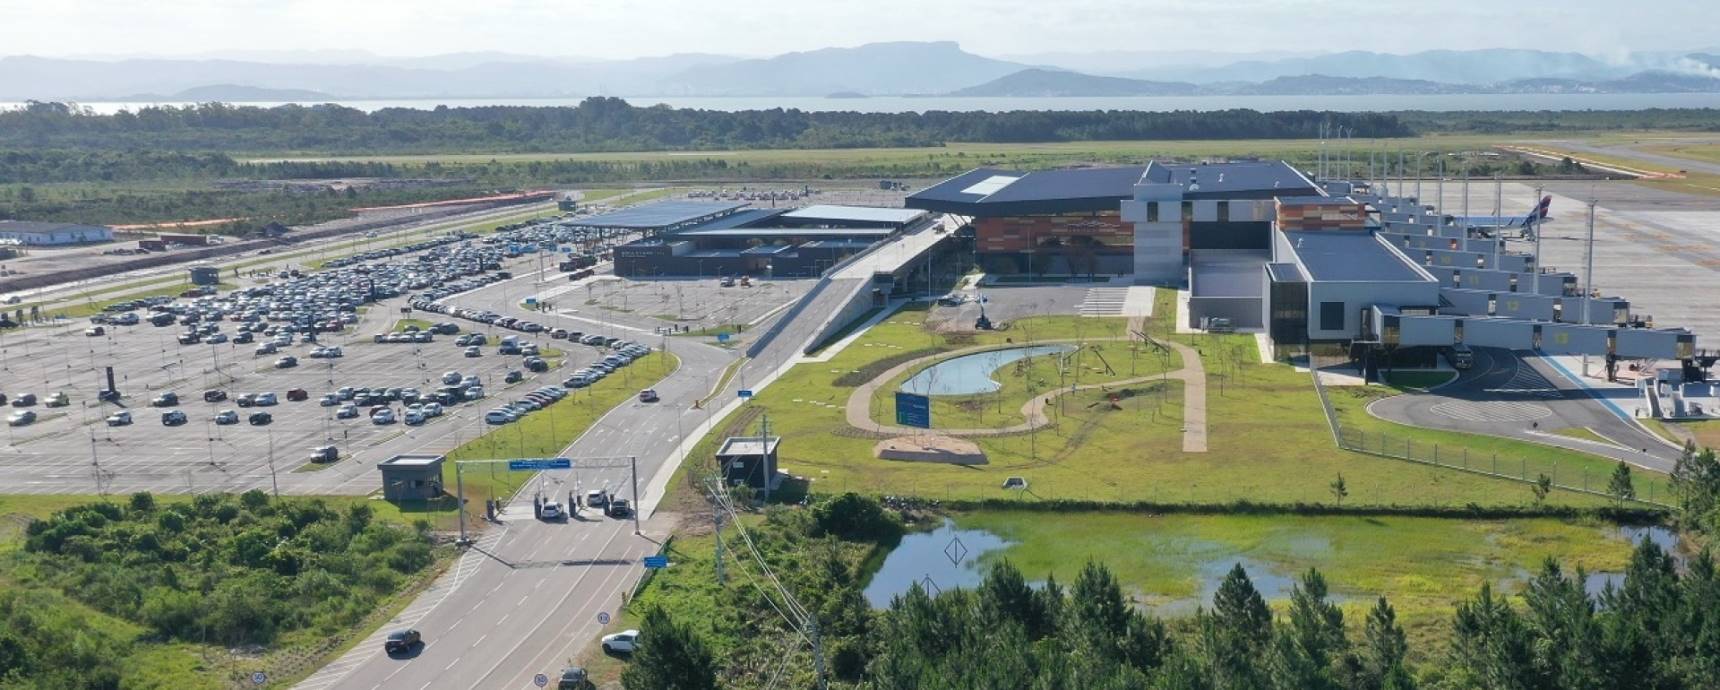 Floripa Flughafen schließt Vertrag mit Mobilitäts-App Garupa ab